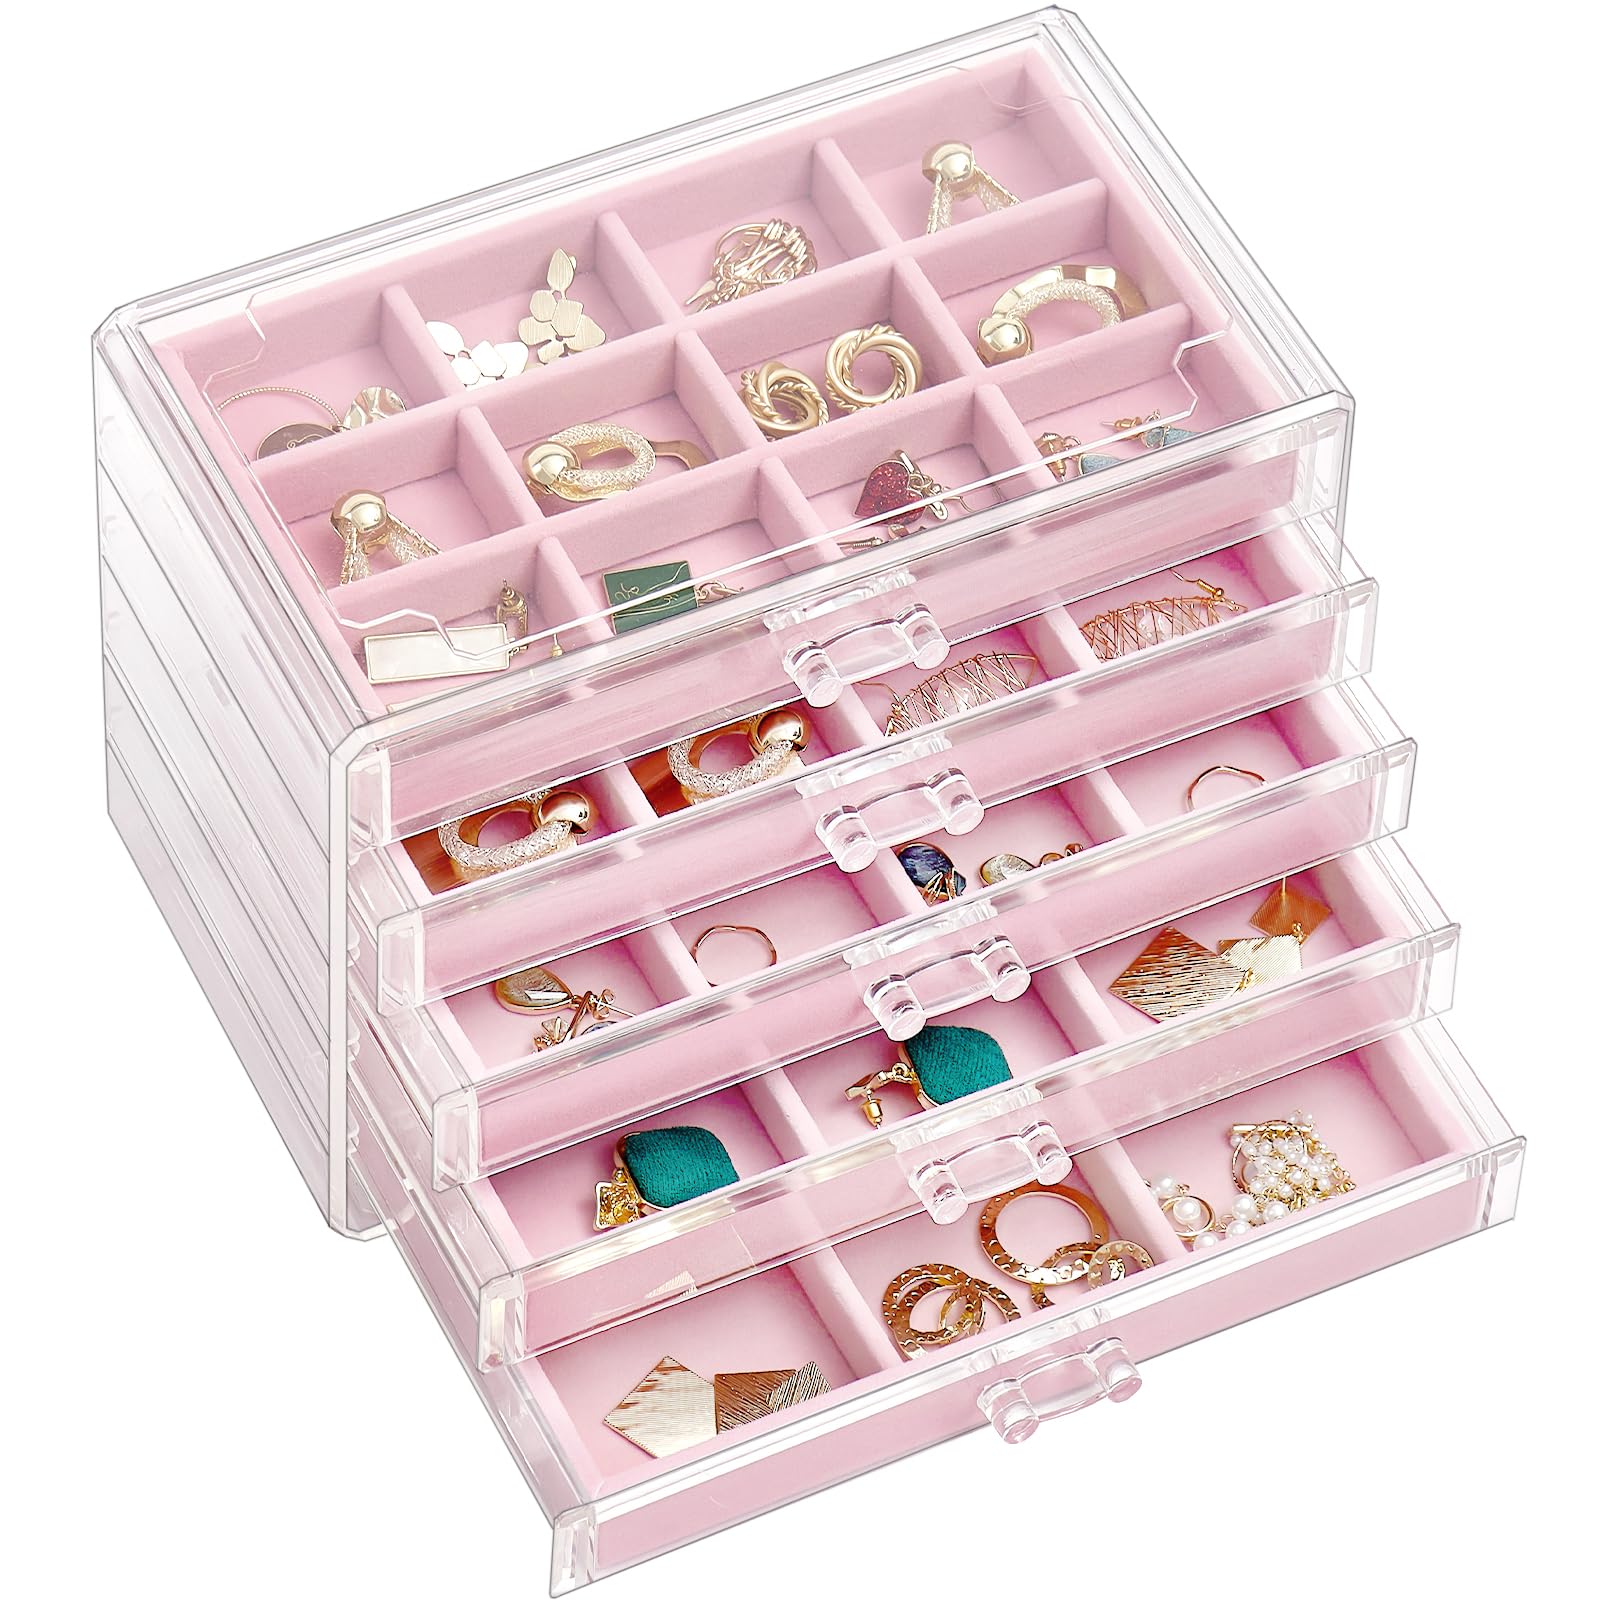 ProCase ジュエリーボックス 5層 ジュエリー収納 透明アクリル 引き出し 女性 女の子 宝石箱 アクセサリーケース オーガナイザー 小物入れ プレゼント-ピンク